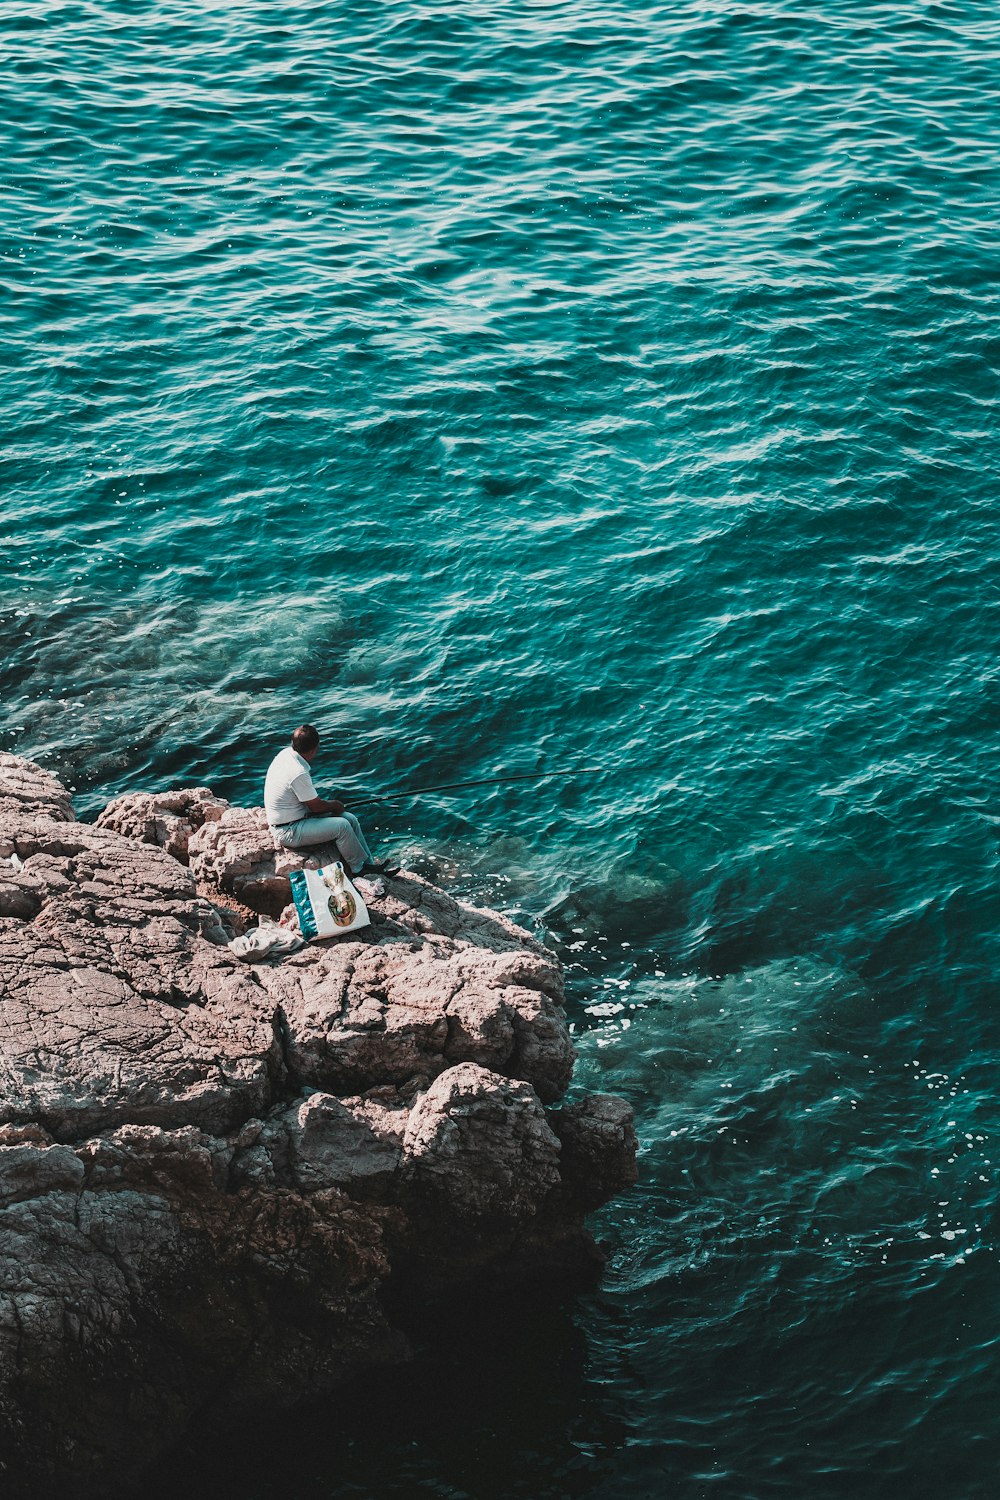 man sitting on rock near body of water during daytime